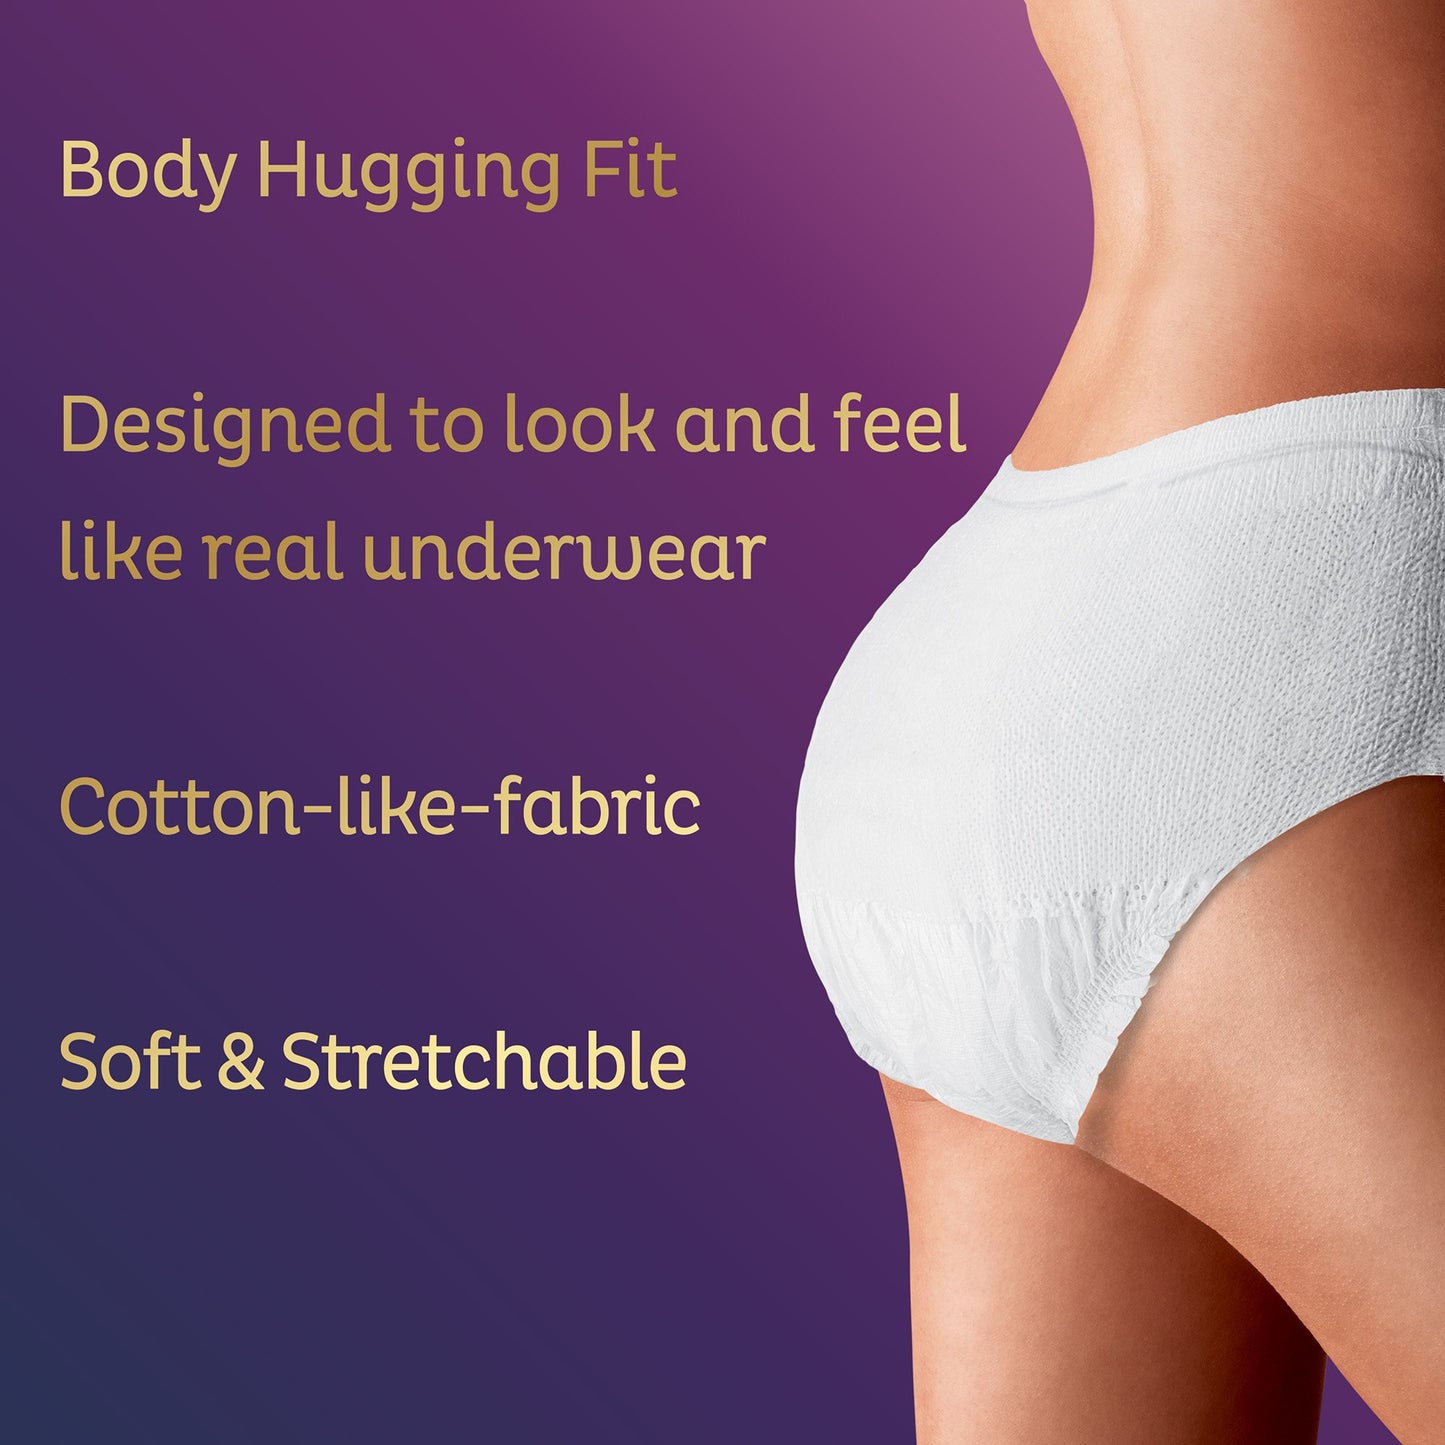 Tena® Women™ Super Plus Absorbent Underwear, Large, 16 ct